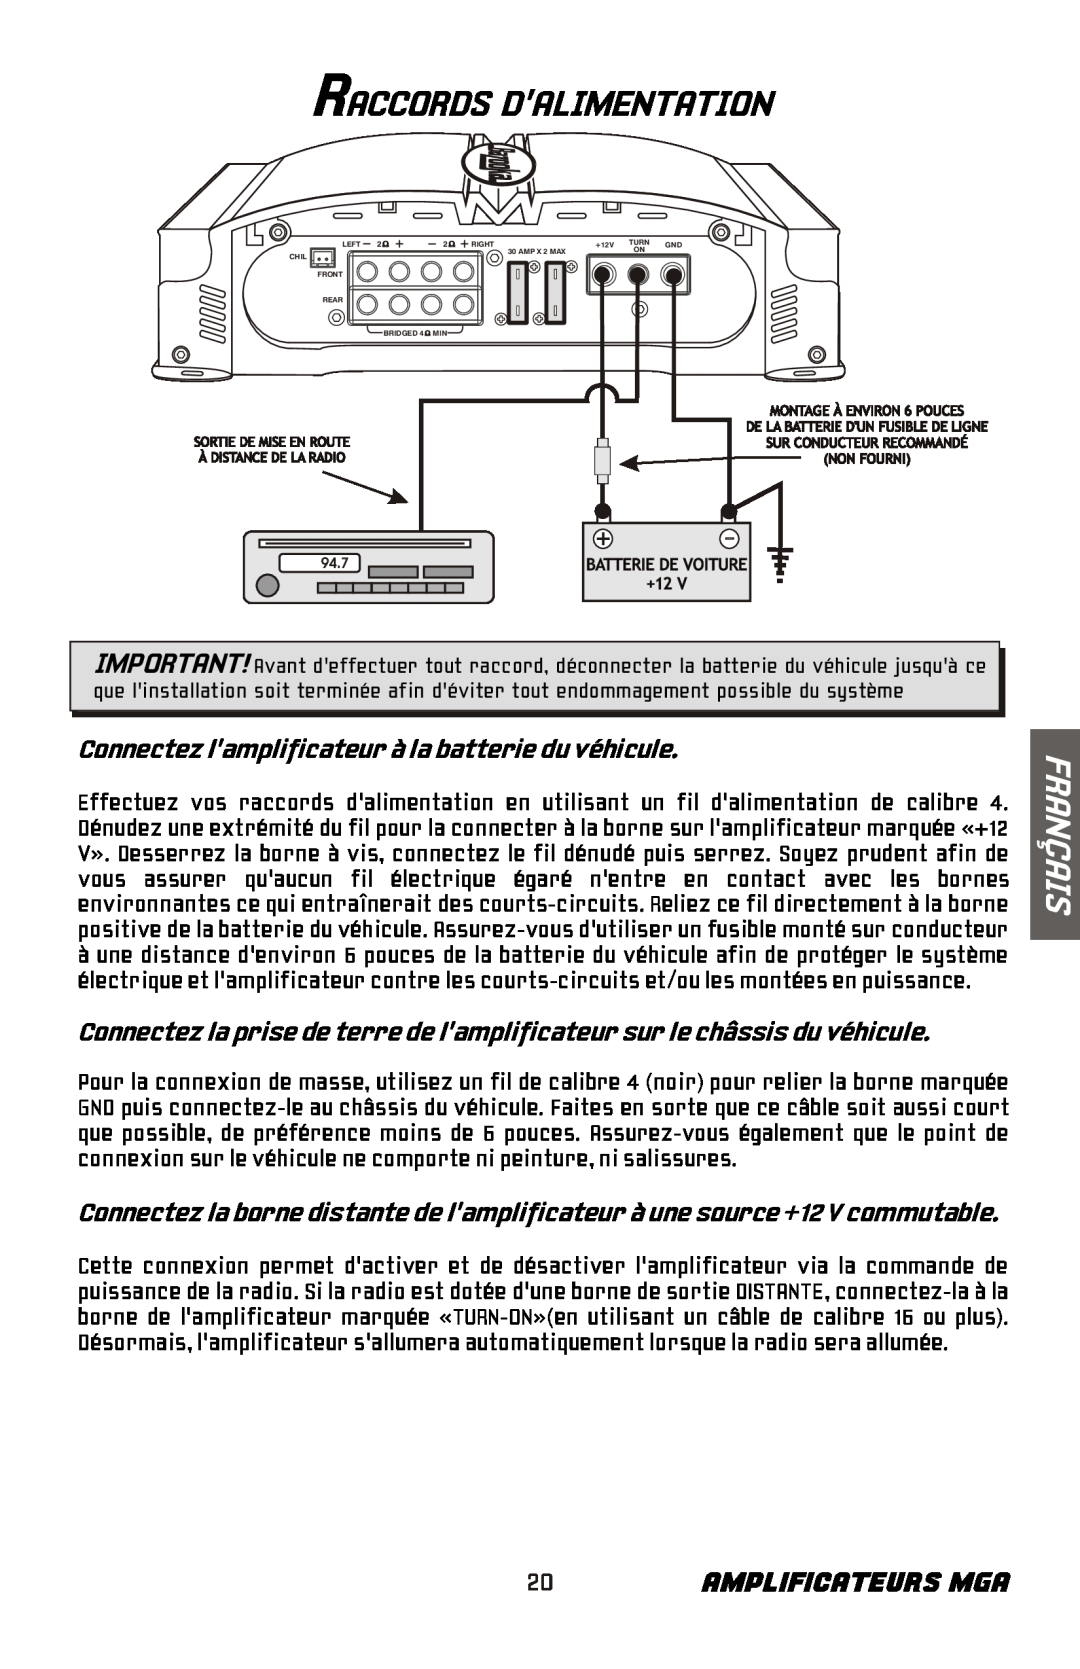 Bazooka MGA4150 manual Raccords Dalimentation, 20AMPLIFICATEURS MGA, Français 